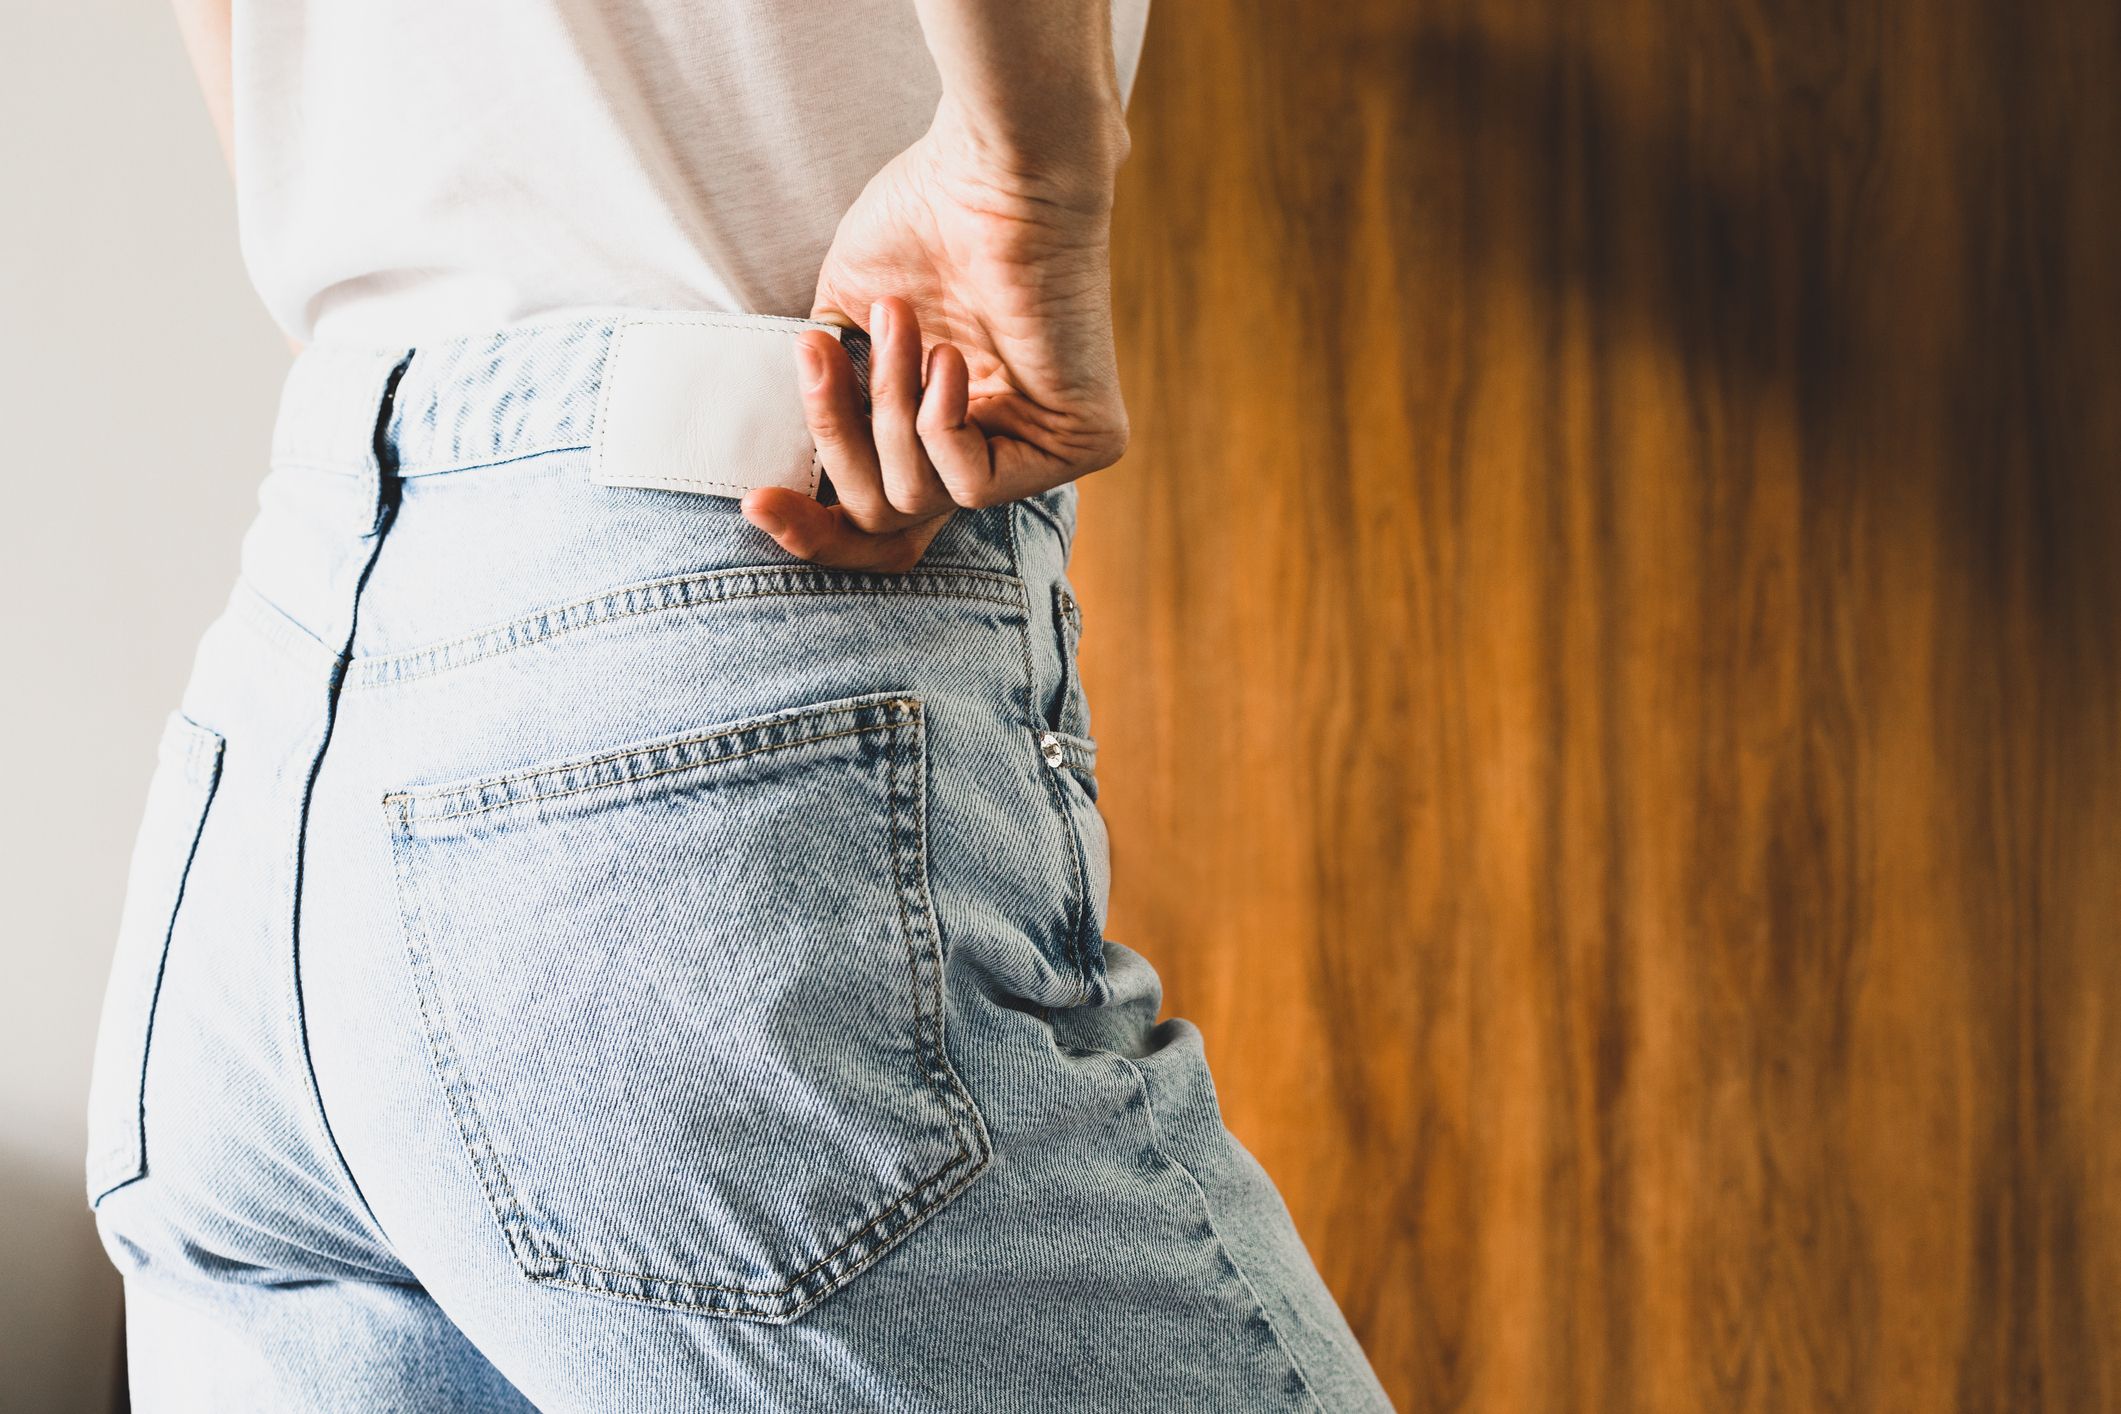 many cross pocket design denim jeans